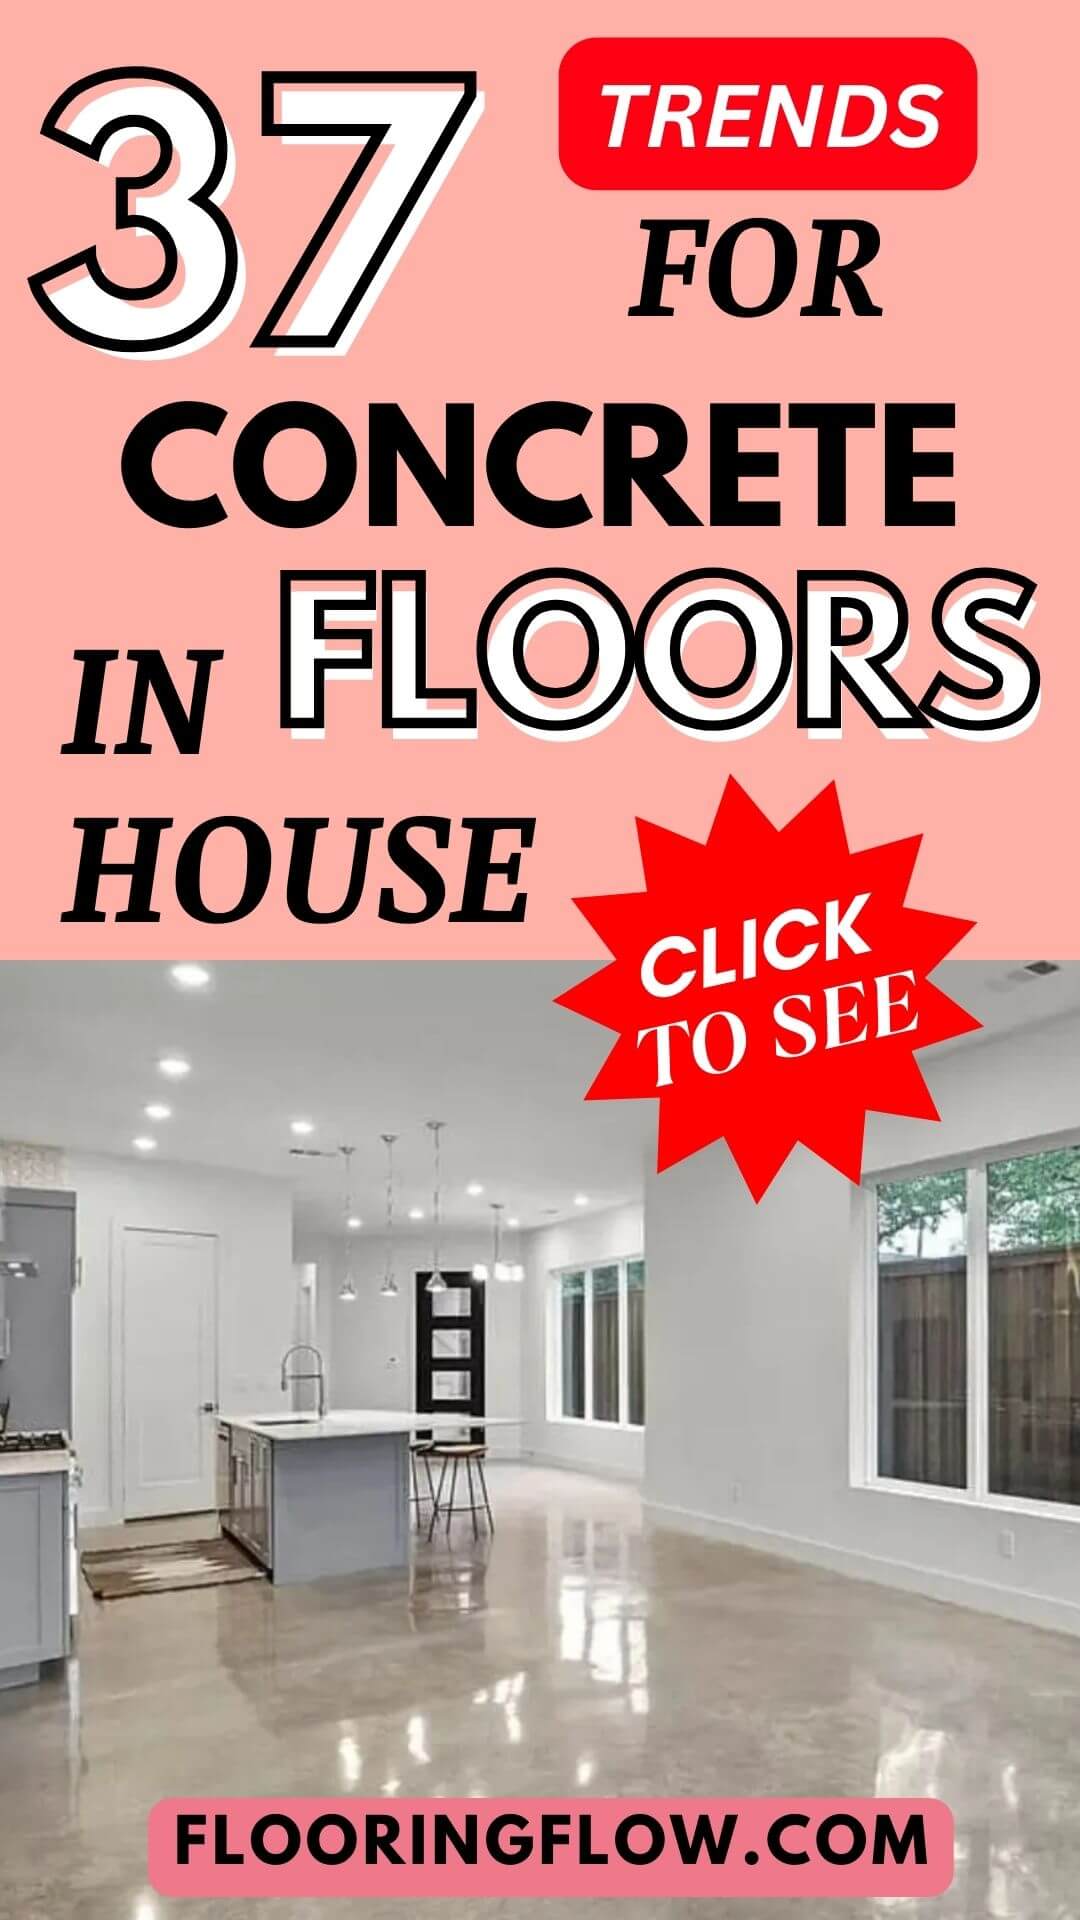 Concrete Floors In House